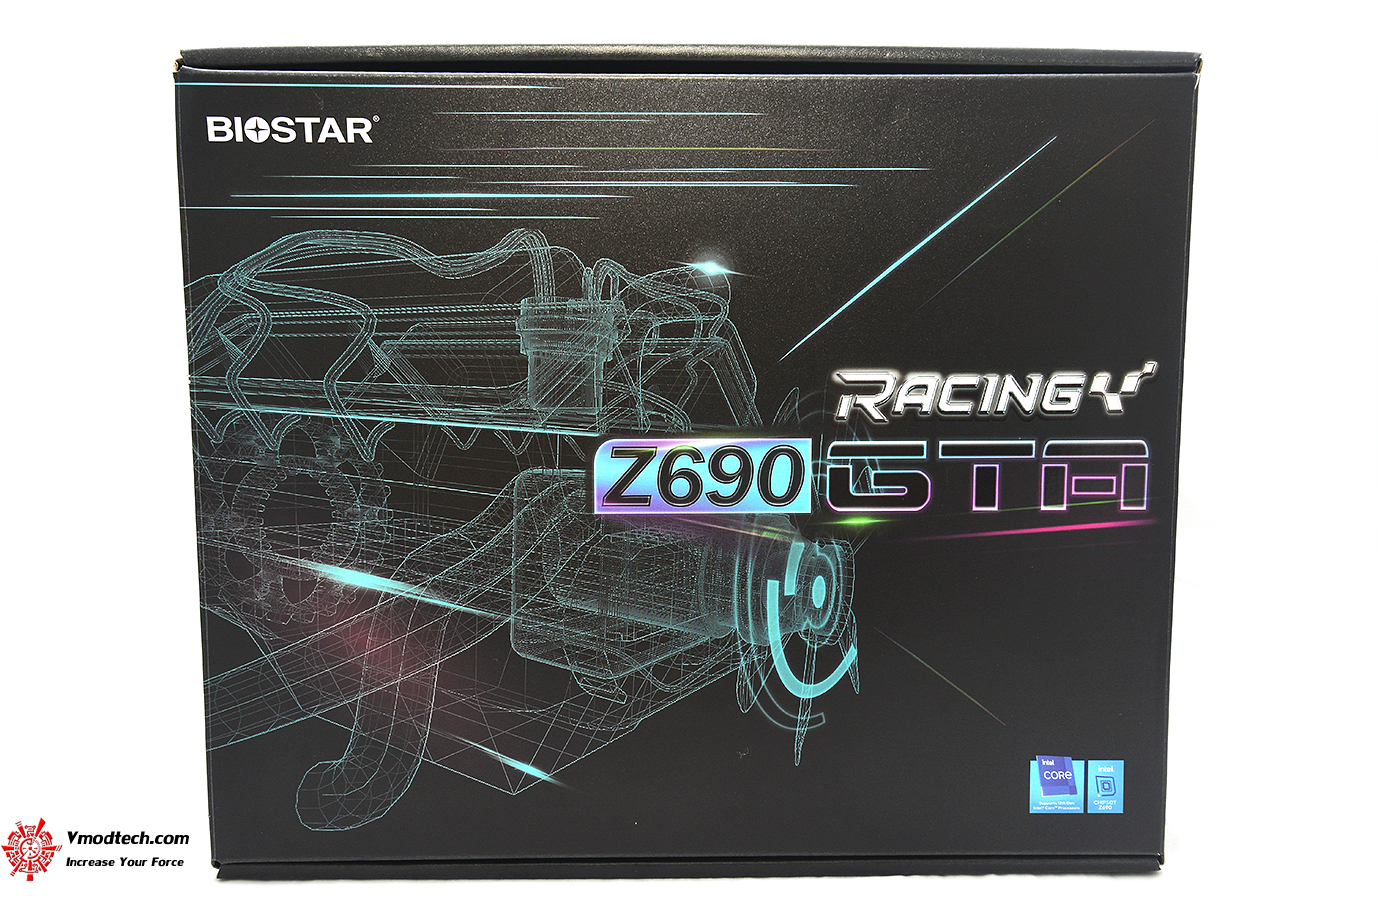 dsc 8968 BIOSTAR RACING Z690 GTA REVIEW